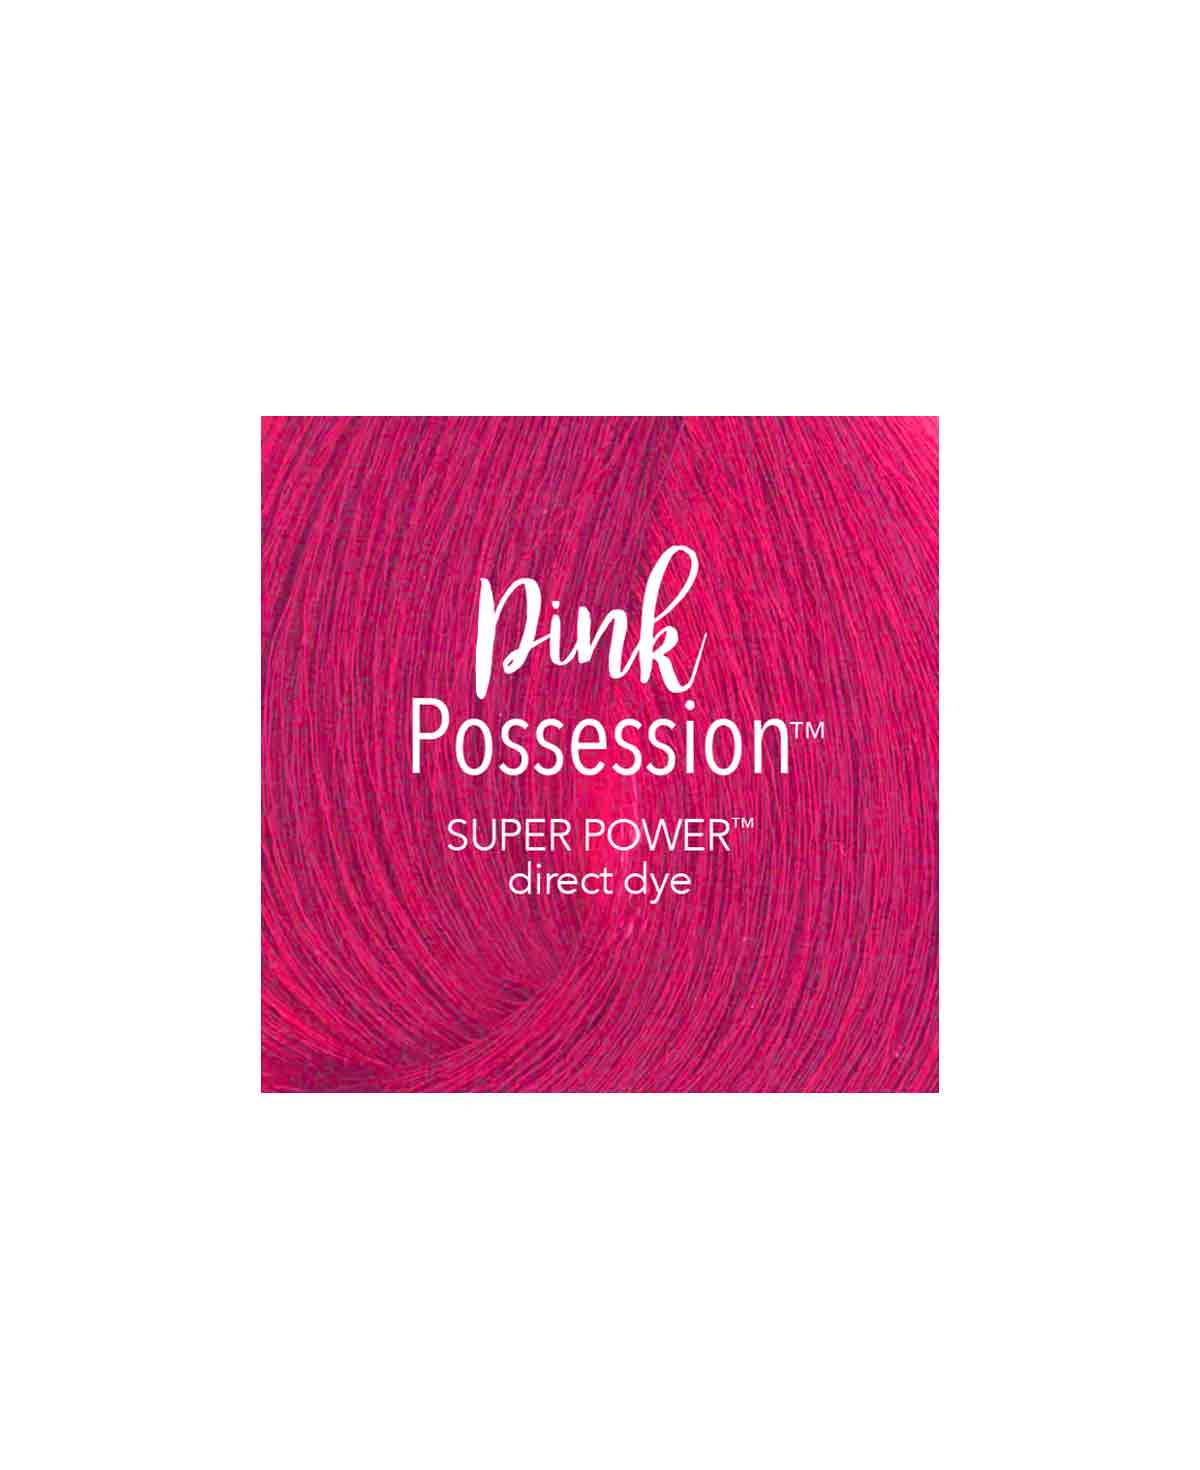 Mydentity - Pink Possession 